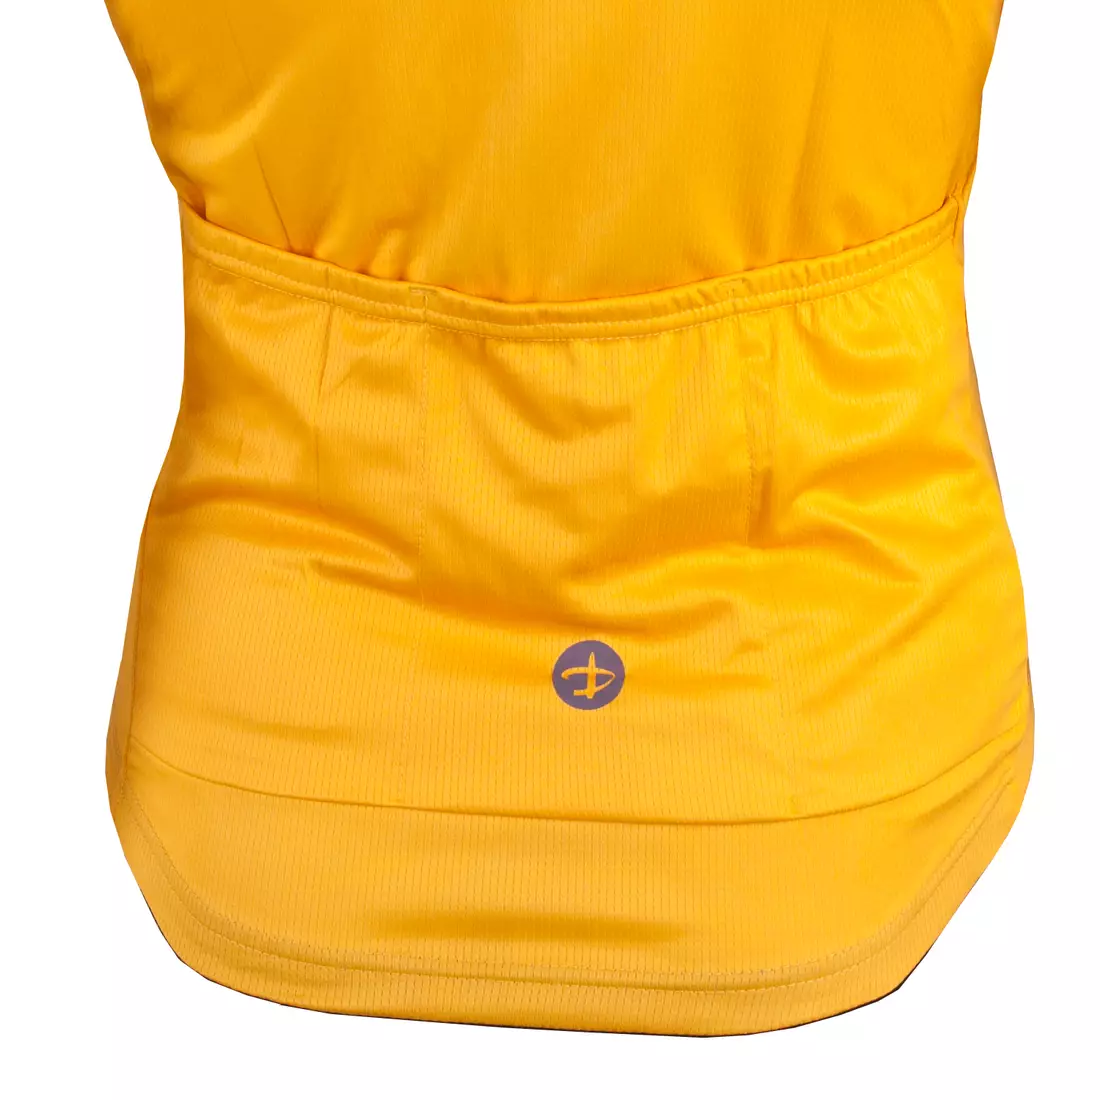 DEKO STYLE-0421 pánský cyklistický dres s krátkým rukávem, orange